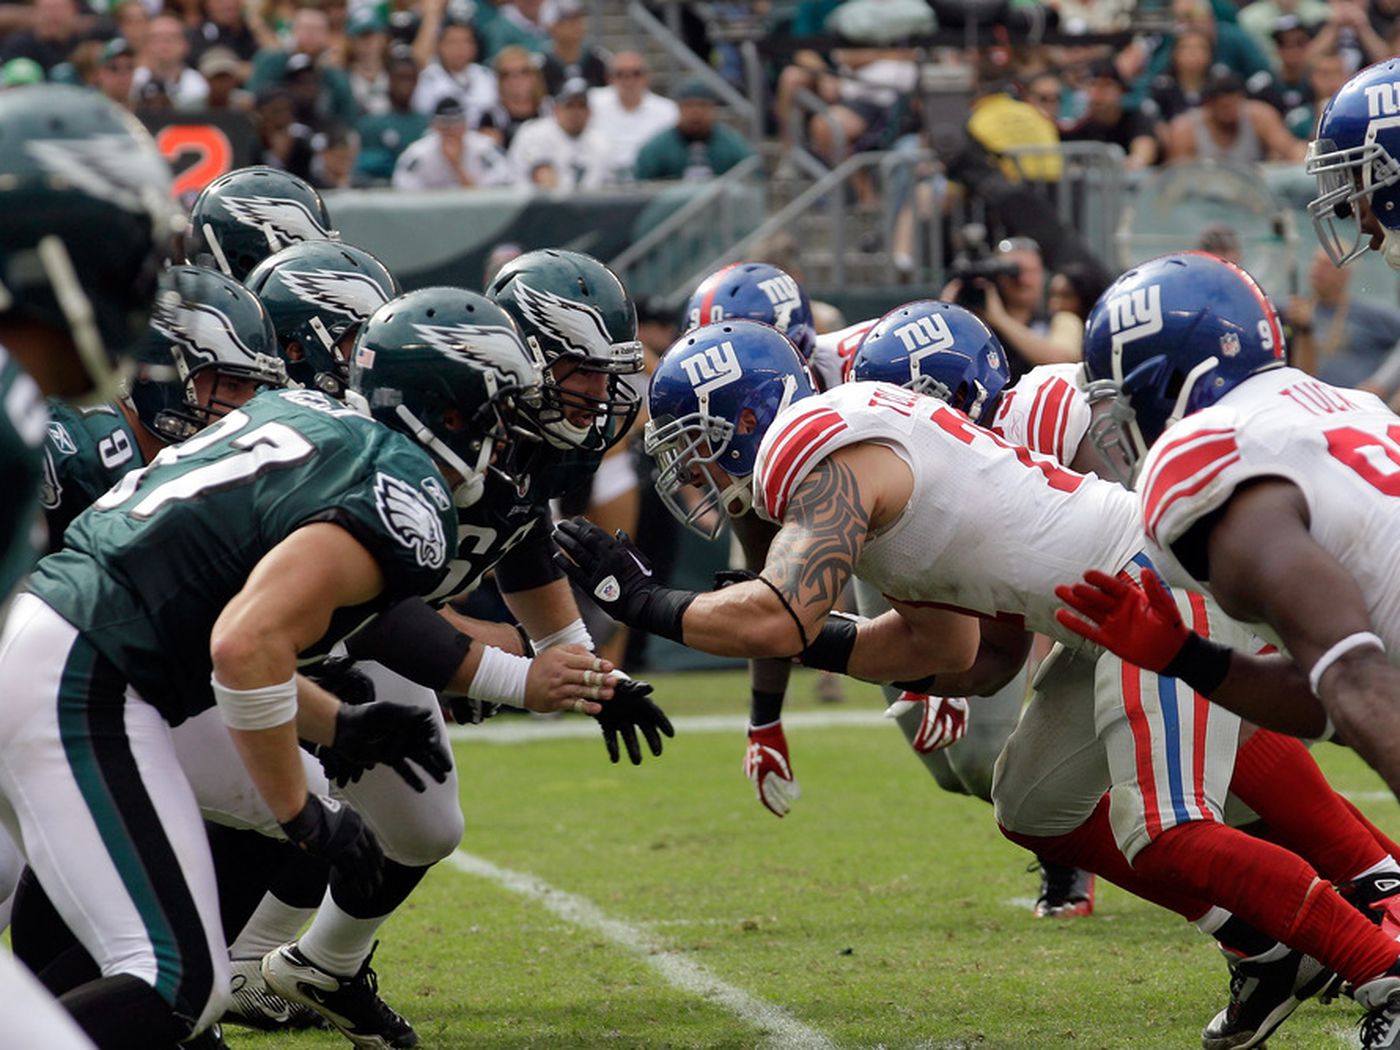 Eagles vs. Giants: The history - SB Nation New York